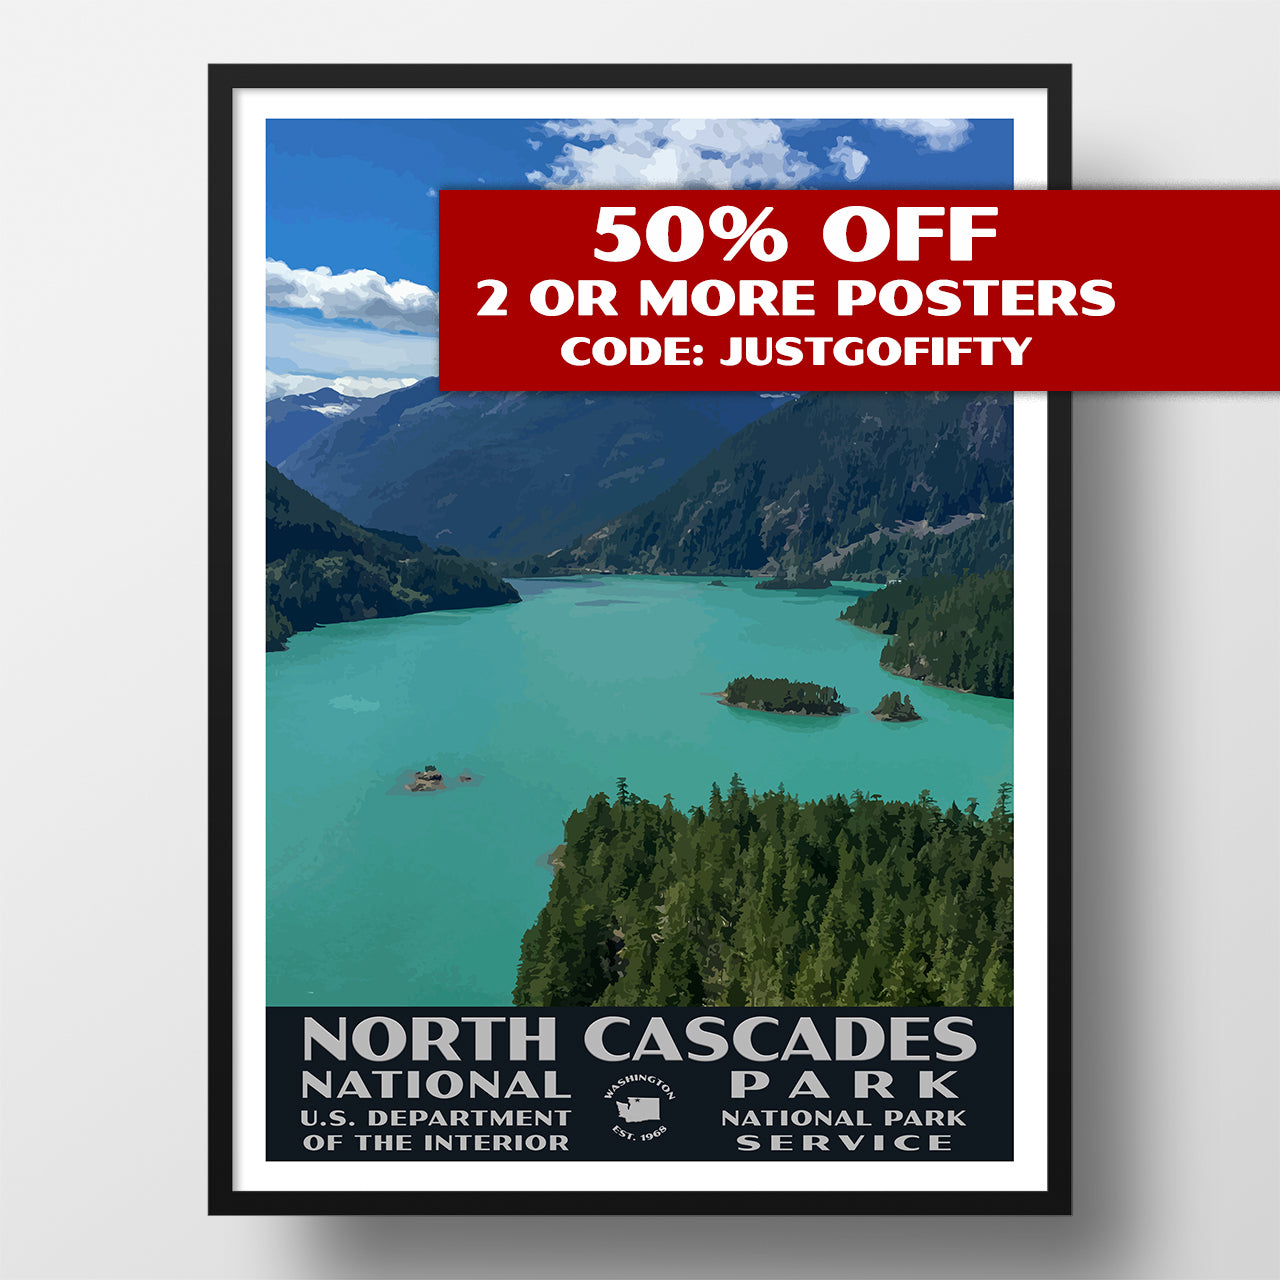 North Cascades National Park poster